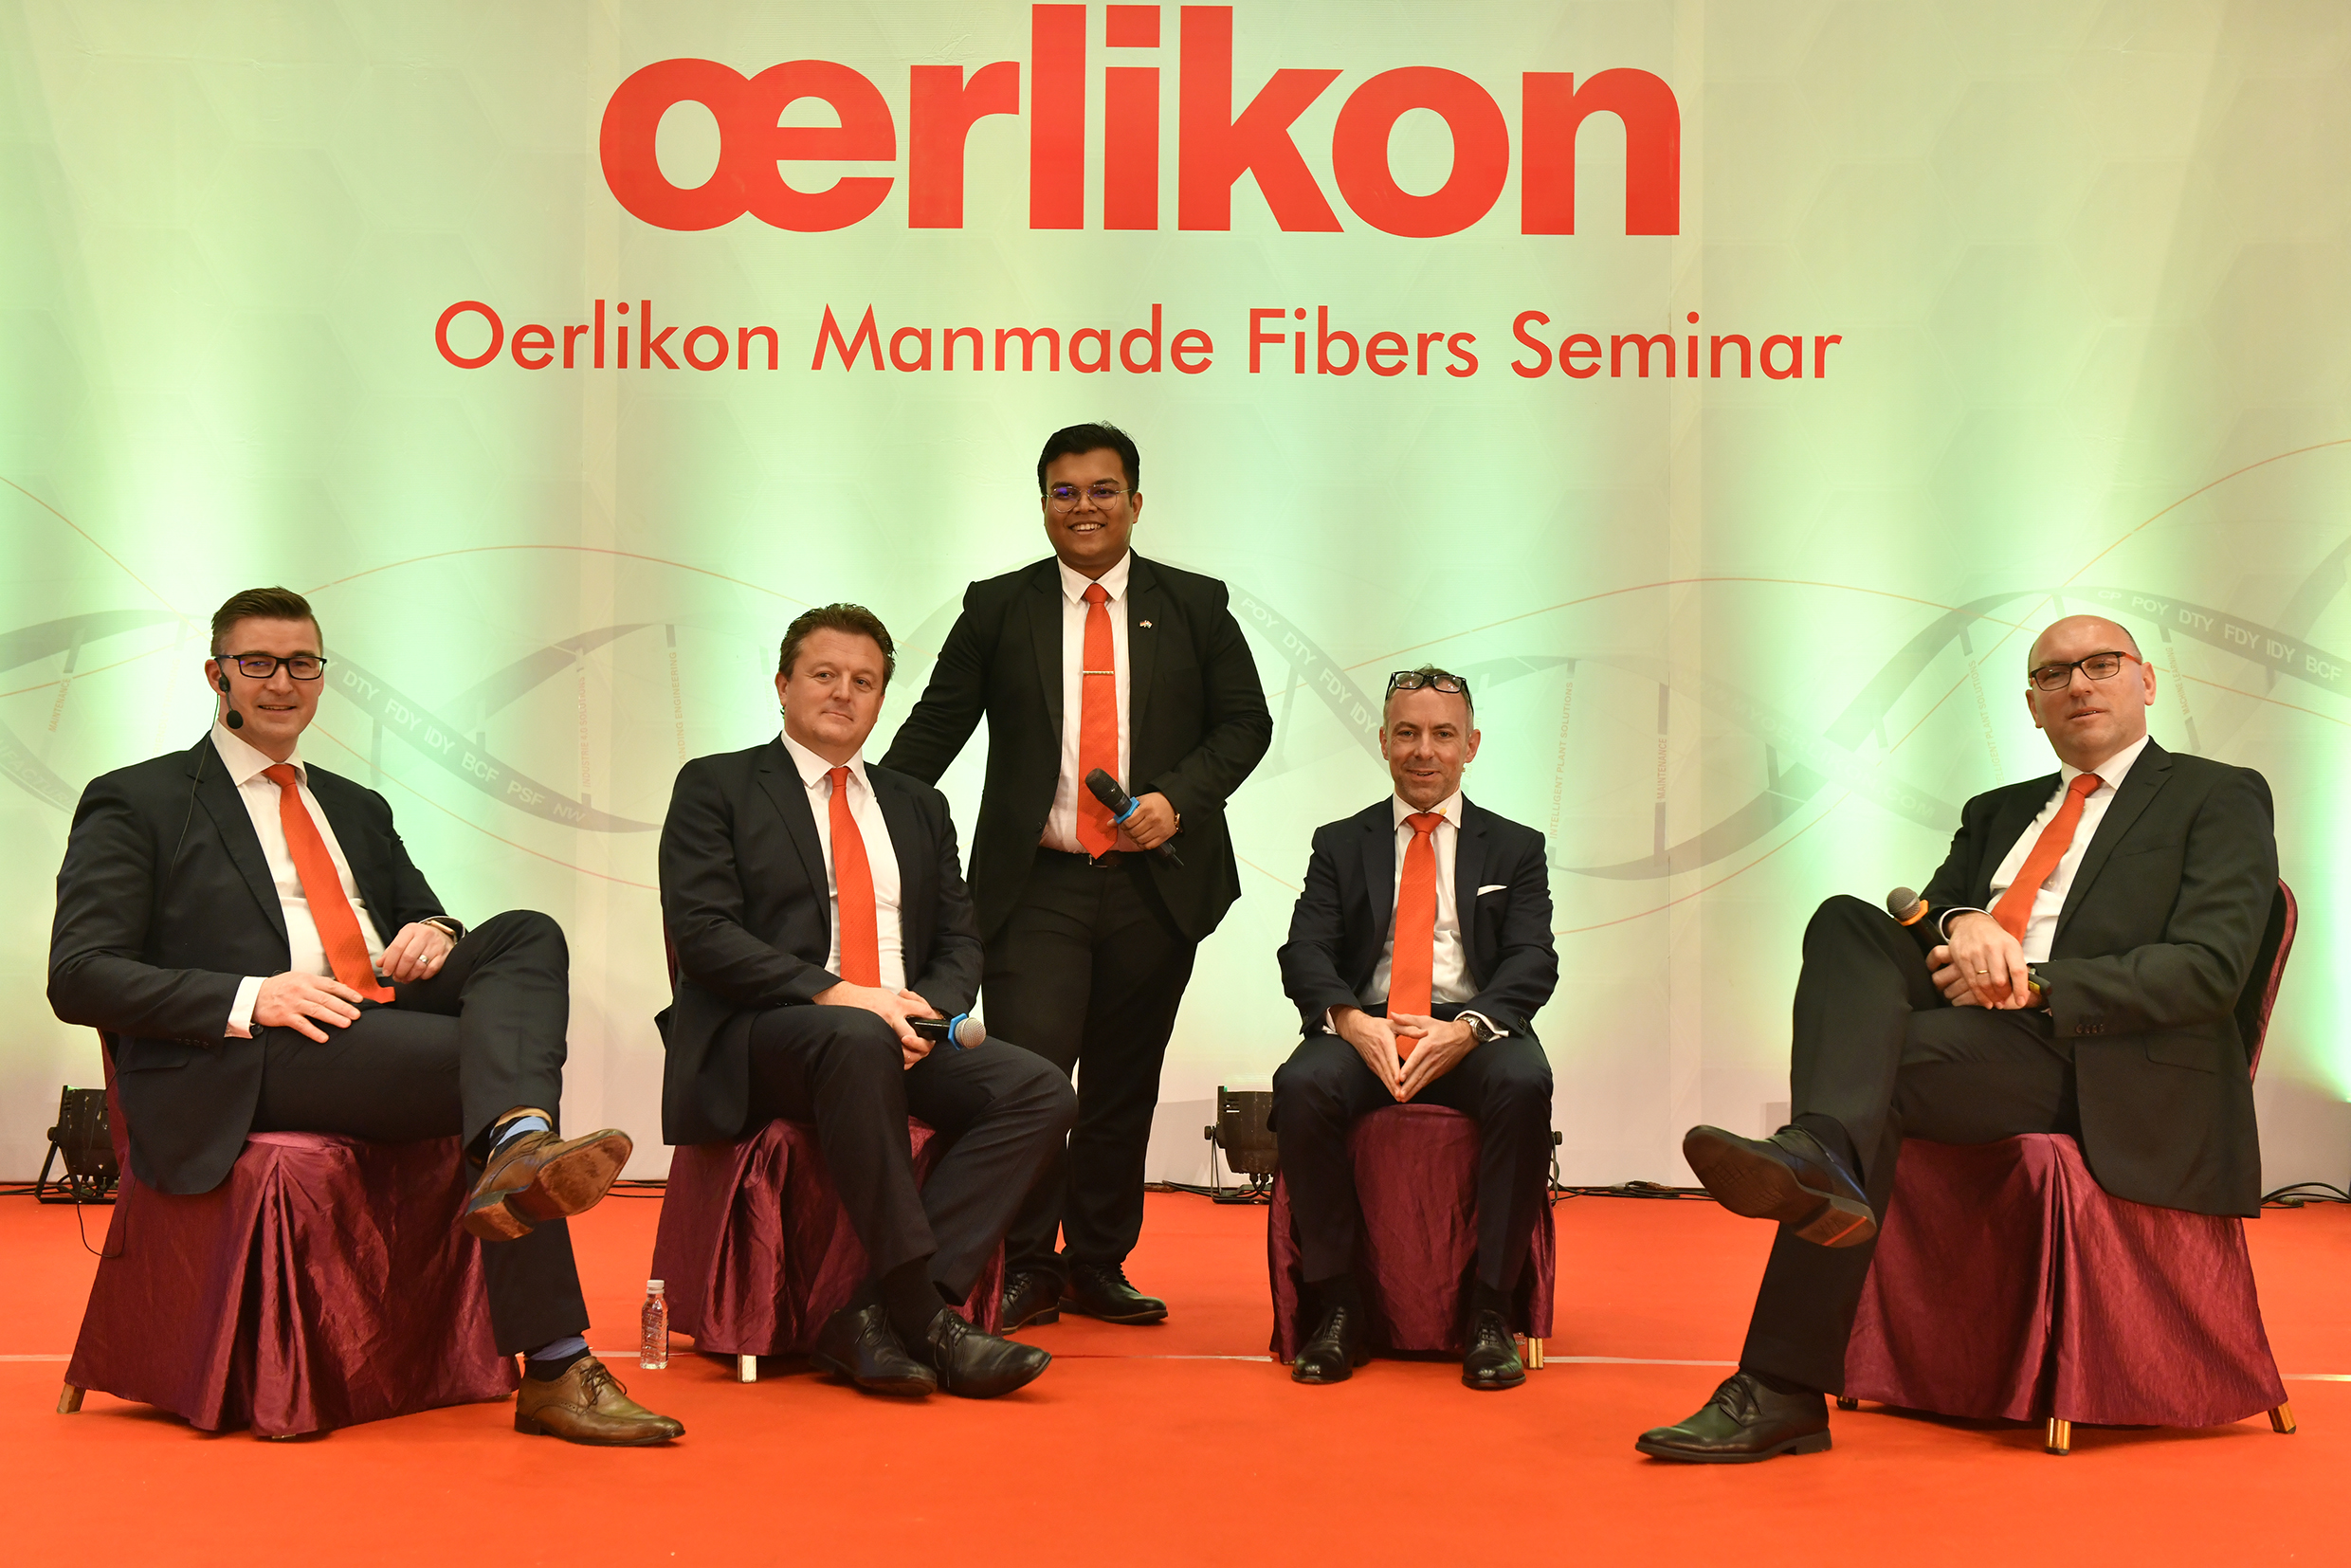 Michael Roellke, Volker Schmid, Jochen Adler and AndreÌ Wissenberg (from left to right) at the podium discussion together with Sudipto Mandal from the Indian subsidiary.